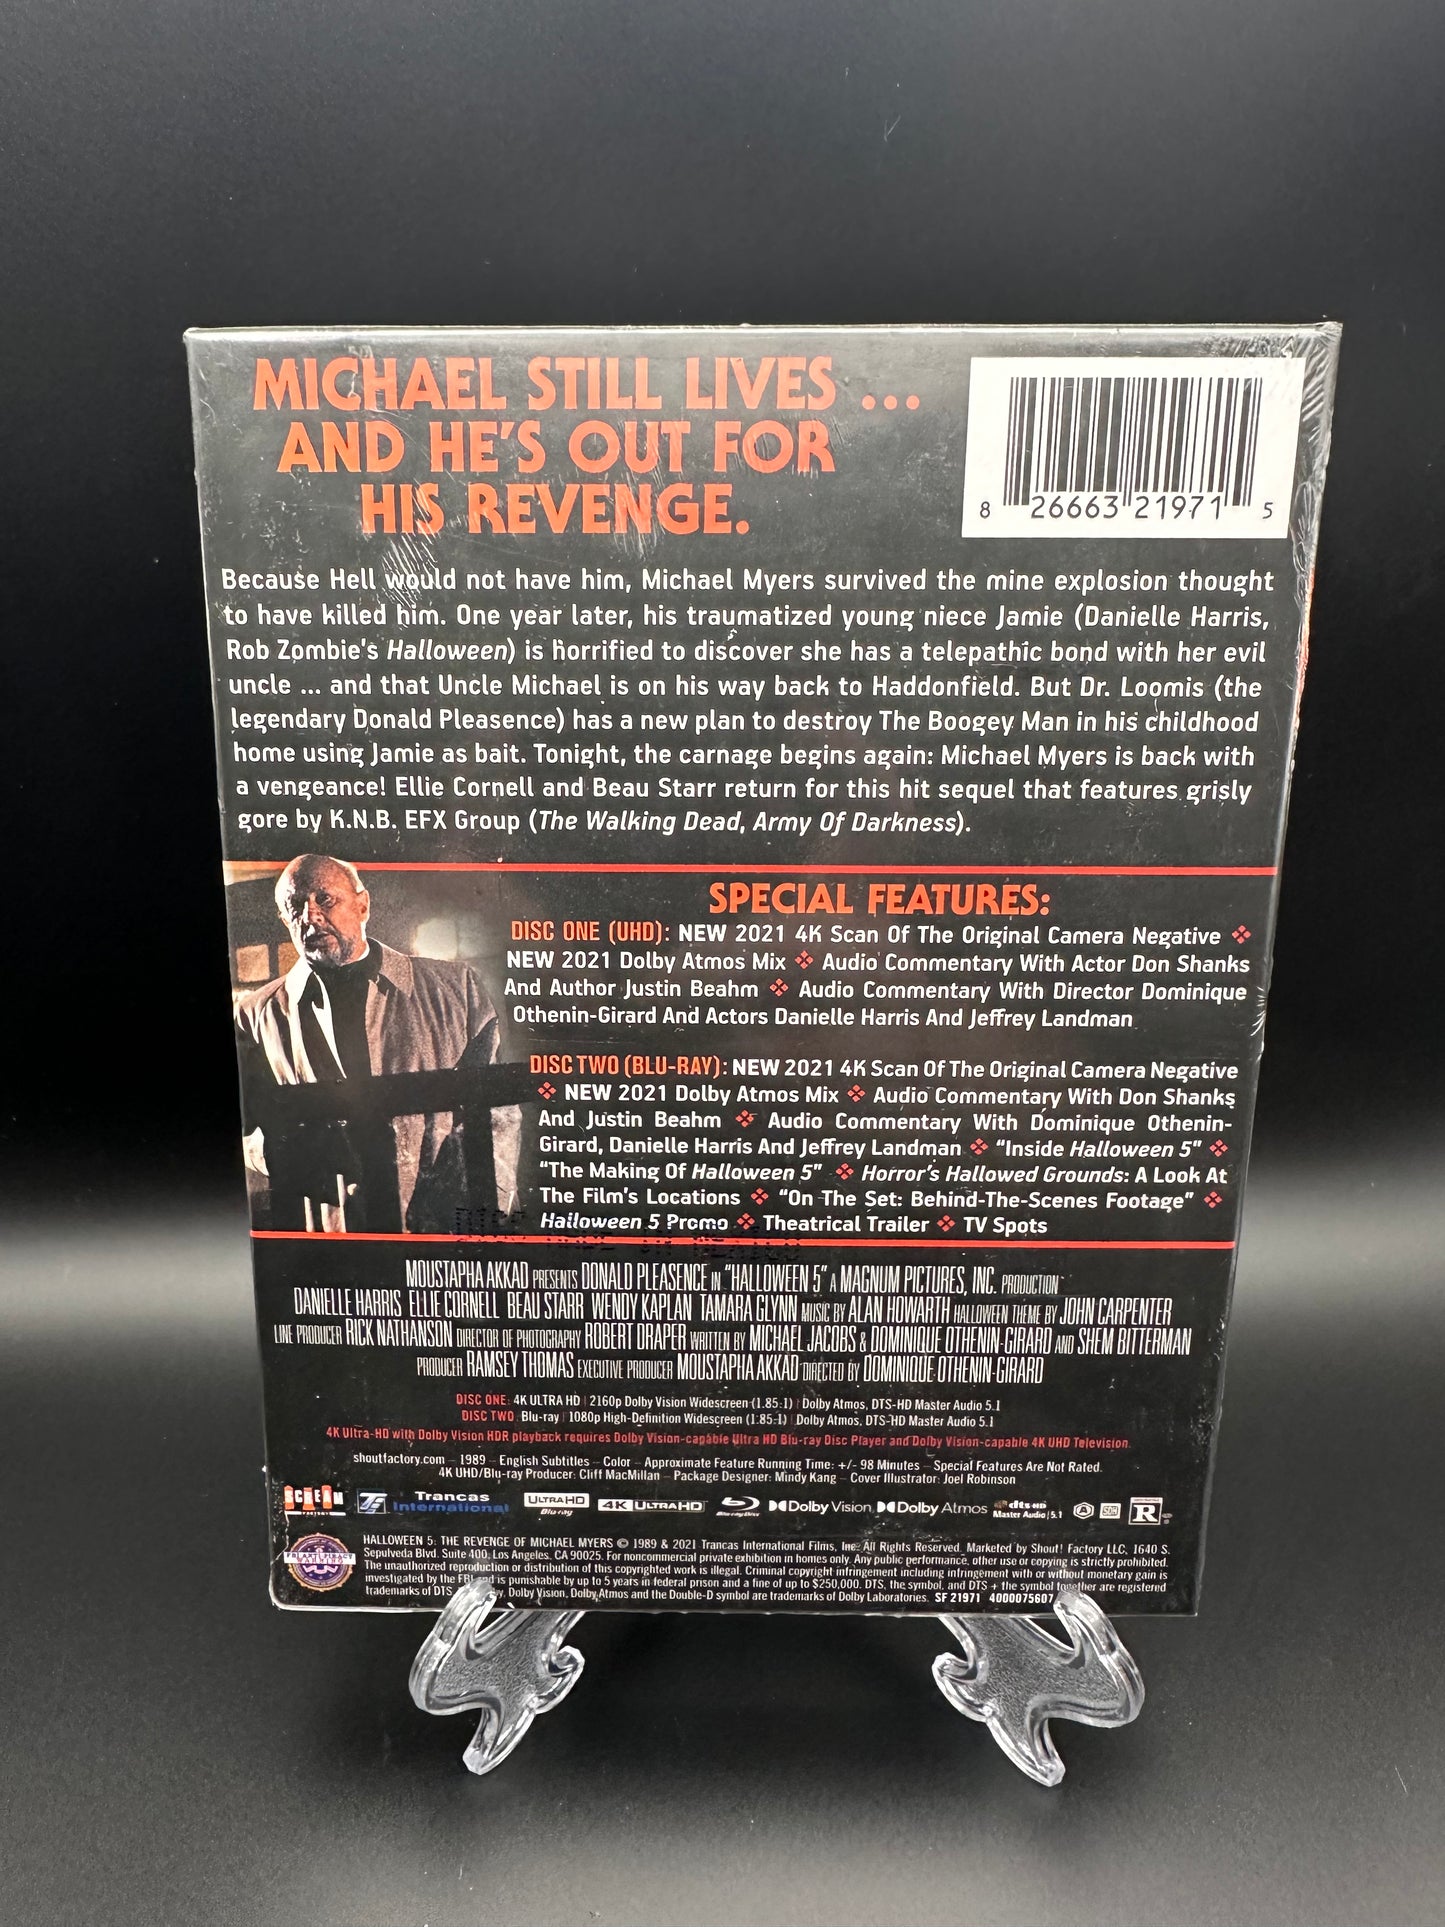 Halloween 5: The Revenge Of Michael Myers (4K Collectors Box)